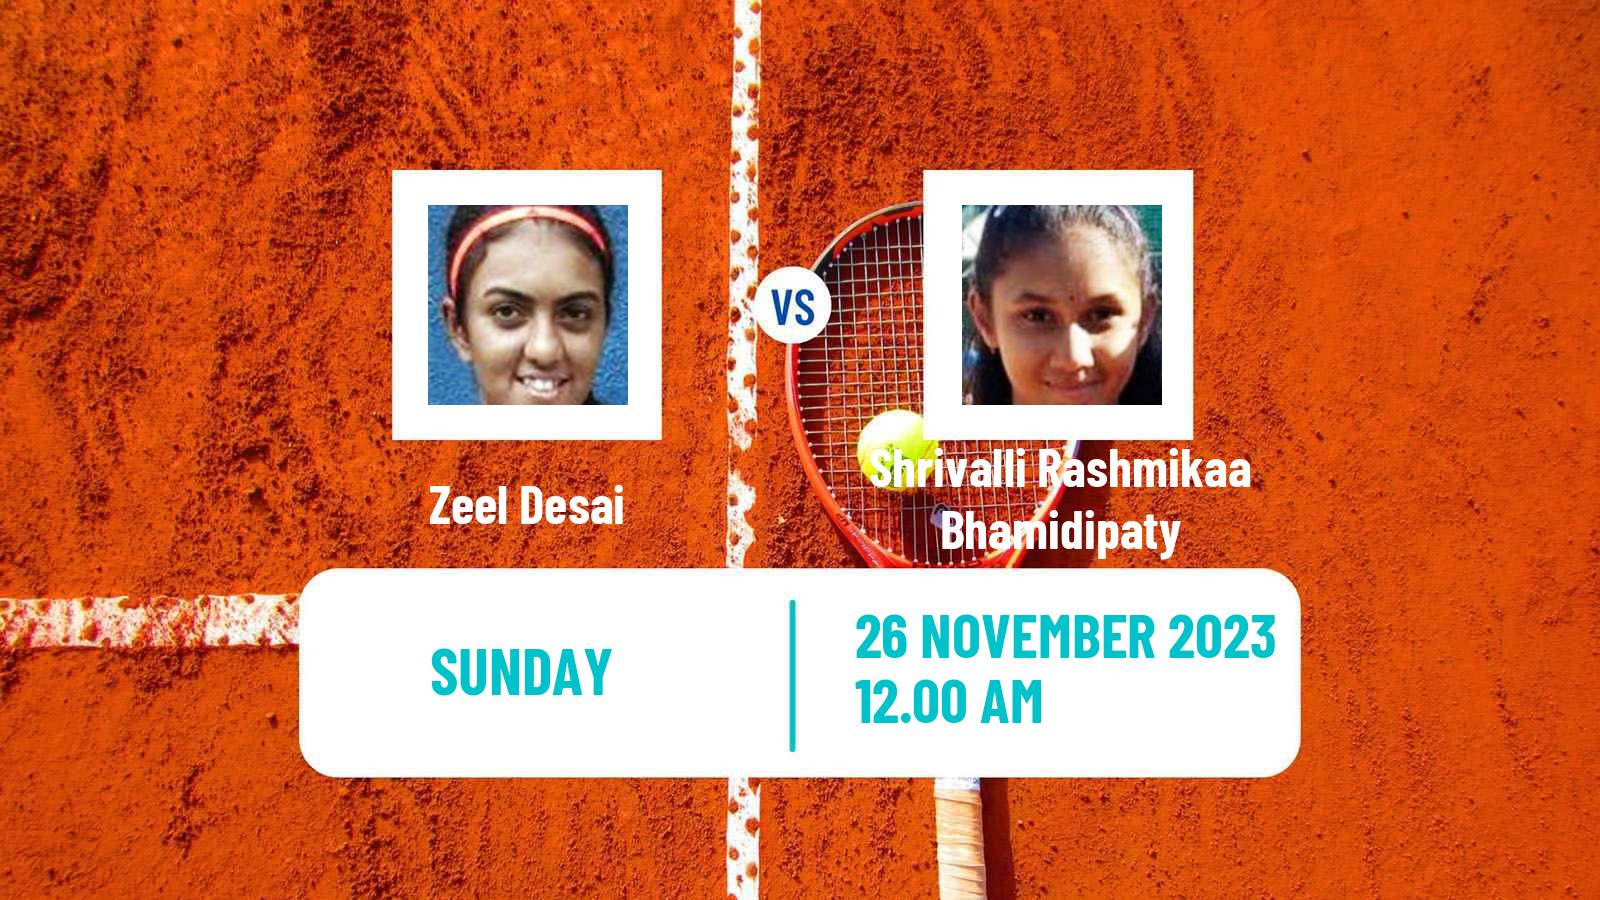 Tennis ITF W25 Bengaluru 2 Women Zeel Desai - Shrivalli Rashmikaa Bhamidipaty